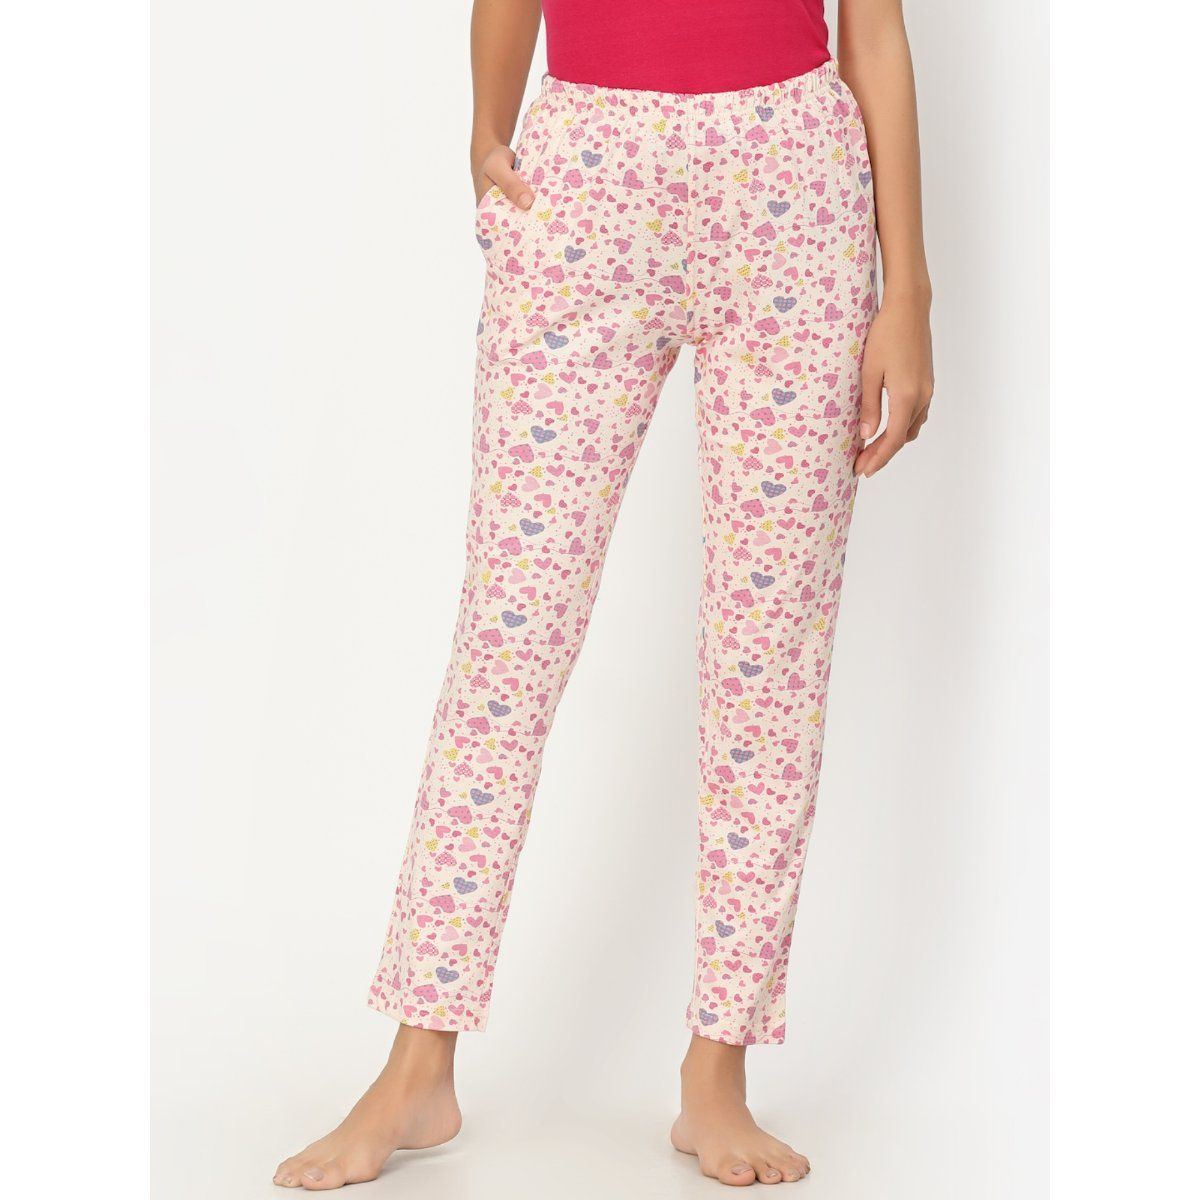 Shop FASO Pyjamas Pants Online  Soft Cotton Pyjamas